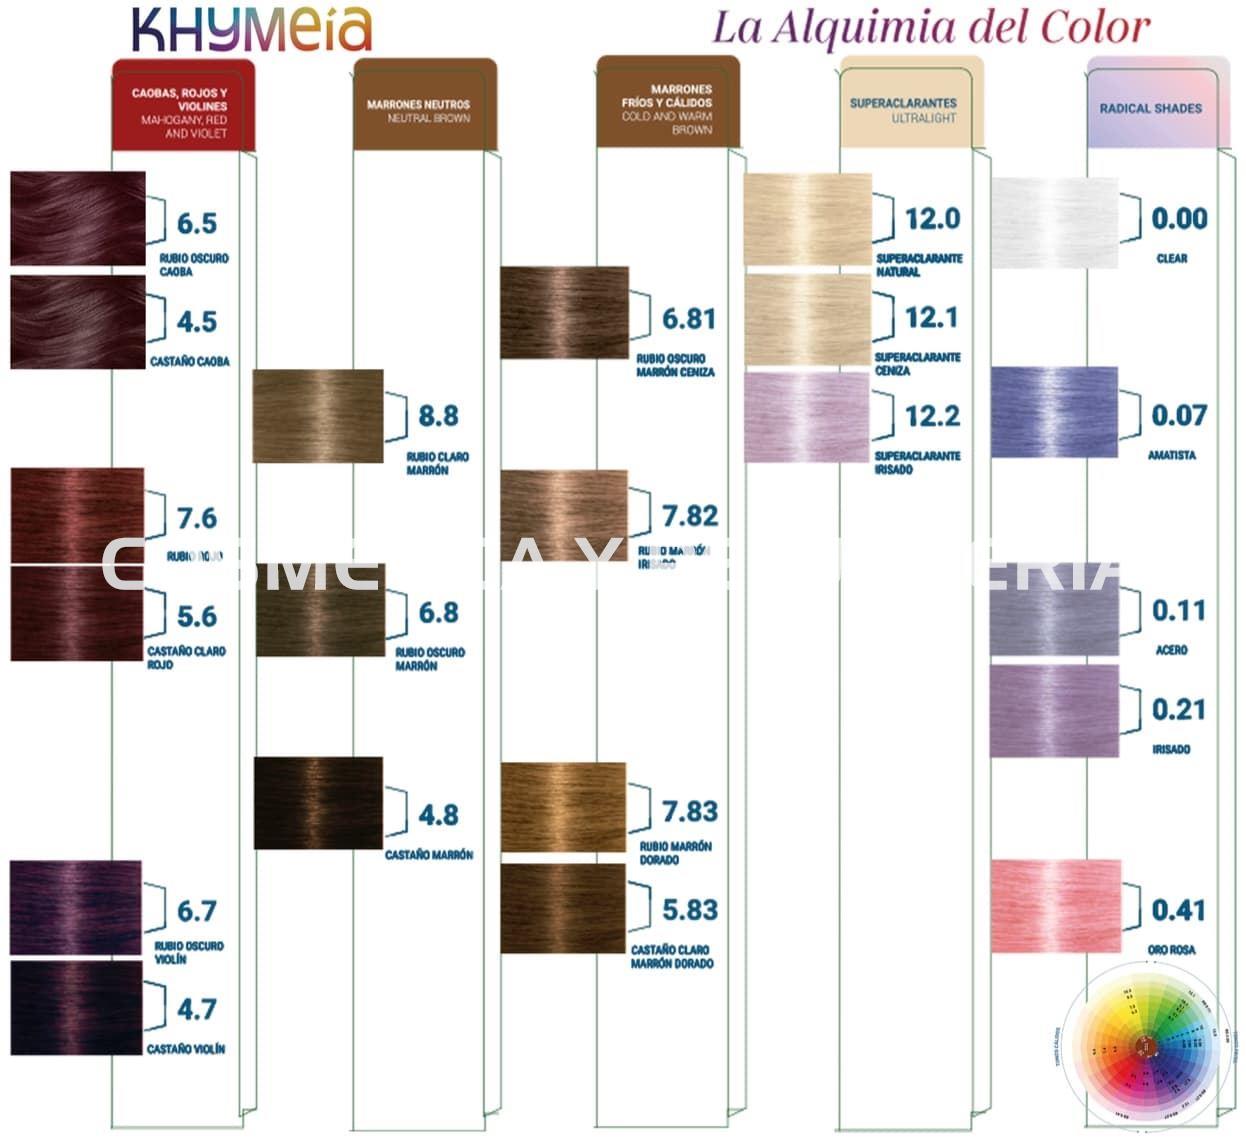 Tinte Khymeía color 6.5 - Imagen 2